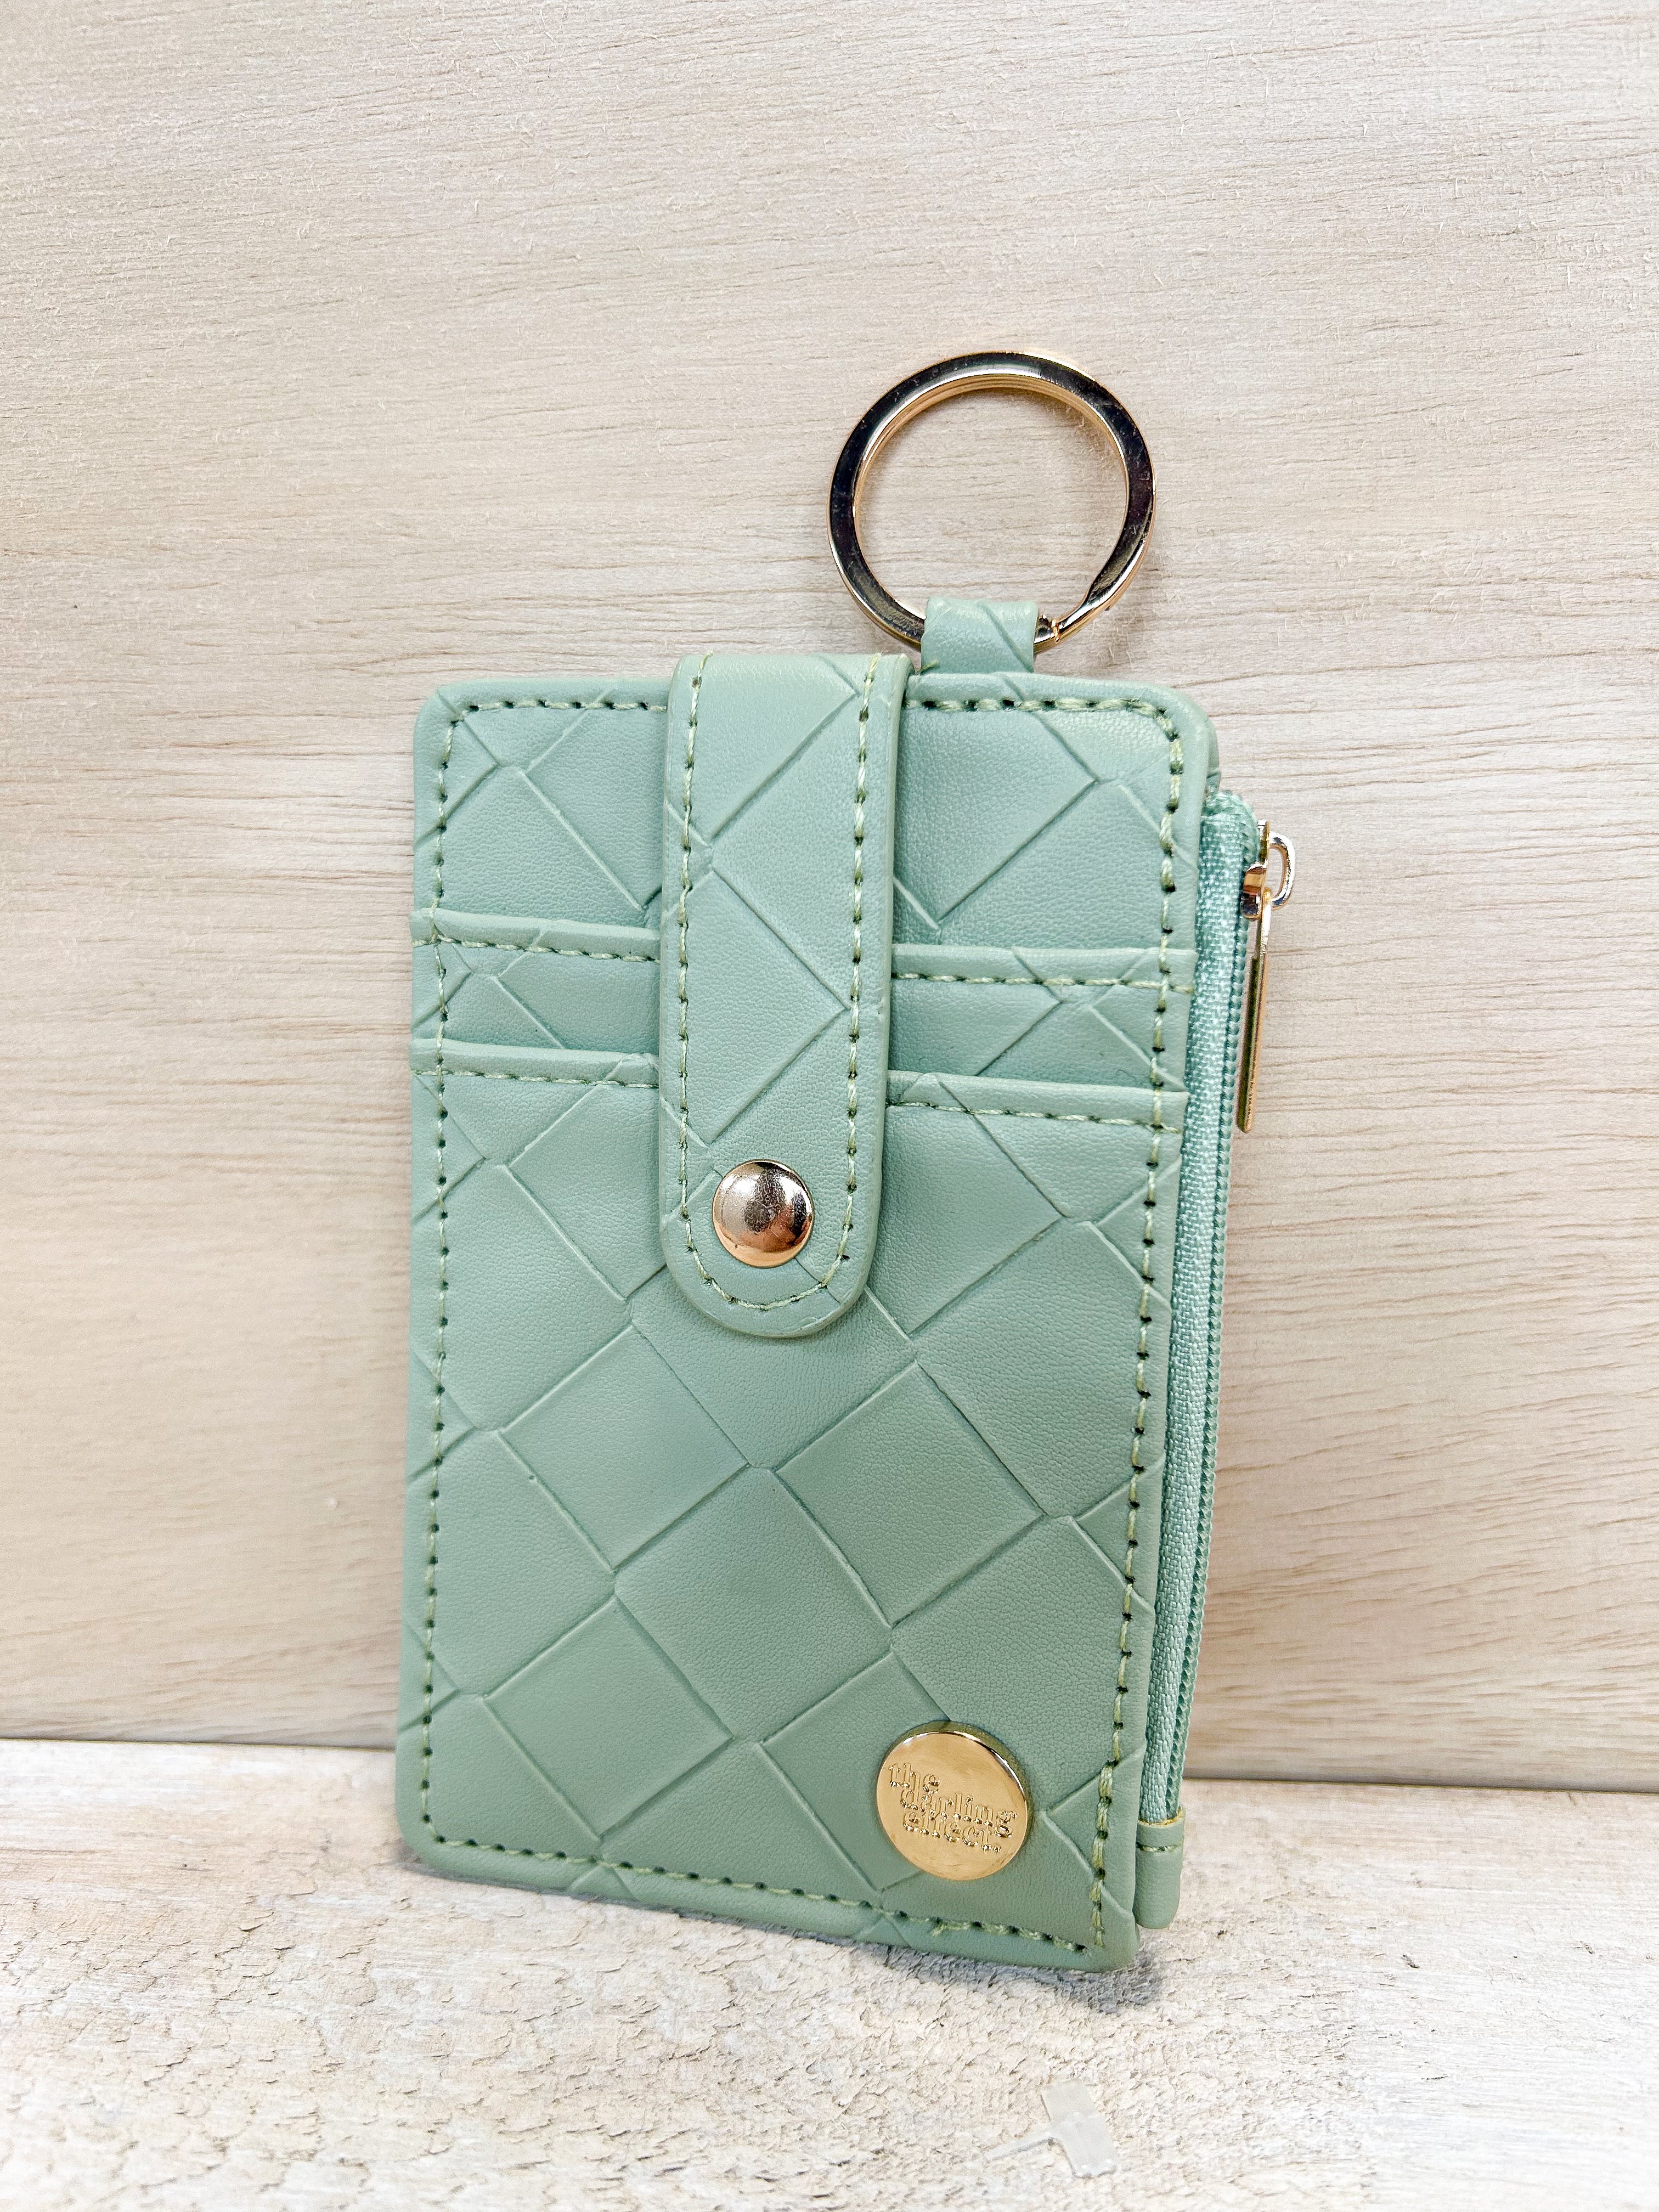 sage green woven keychain wallet, gold hardware, zipper closure